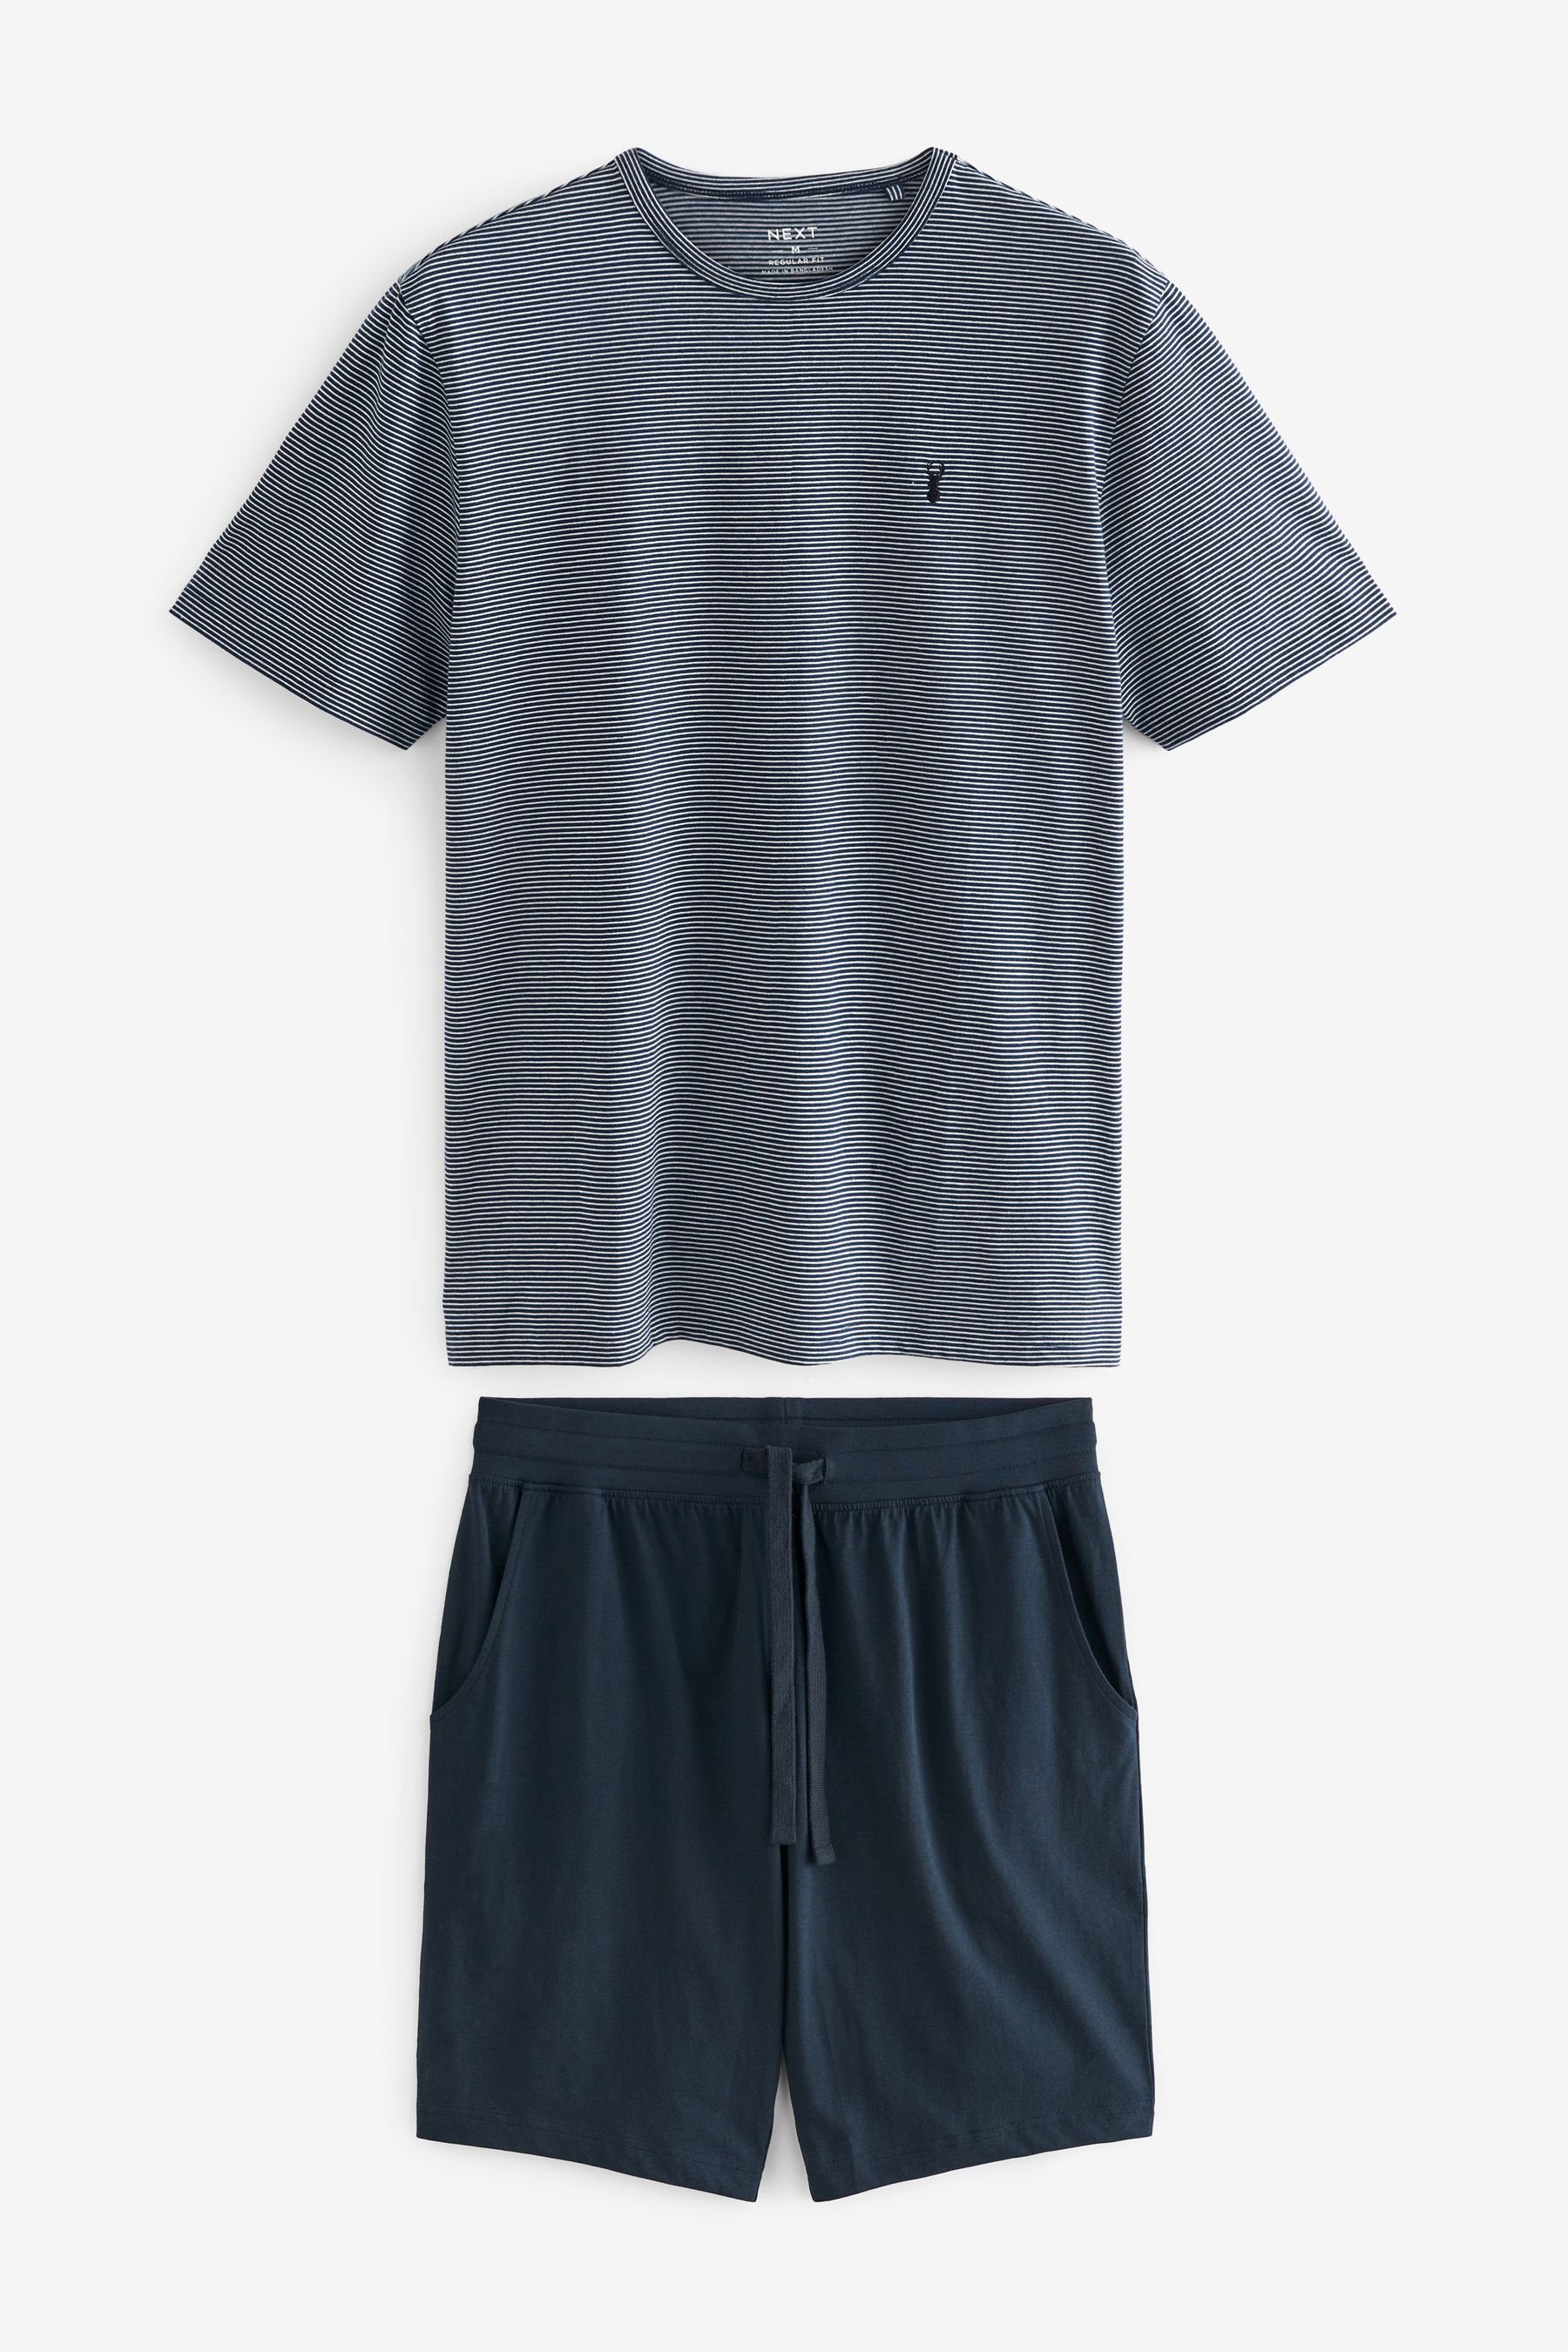 tlg) Shorts (2 Pyjama Next Jersey-Schlafanzug mit